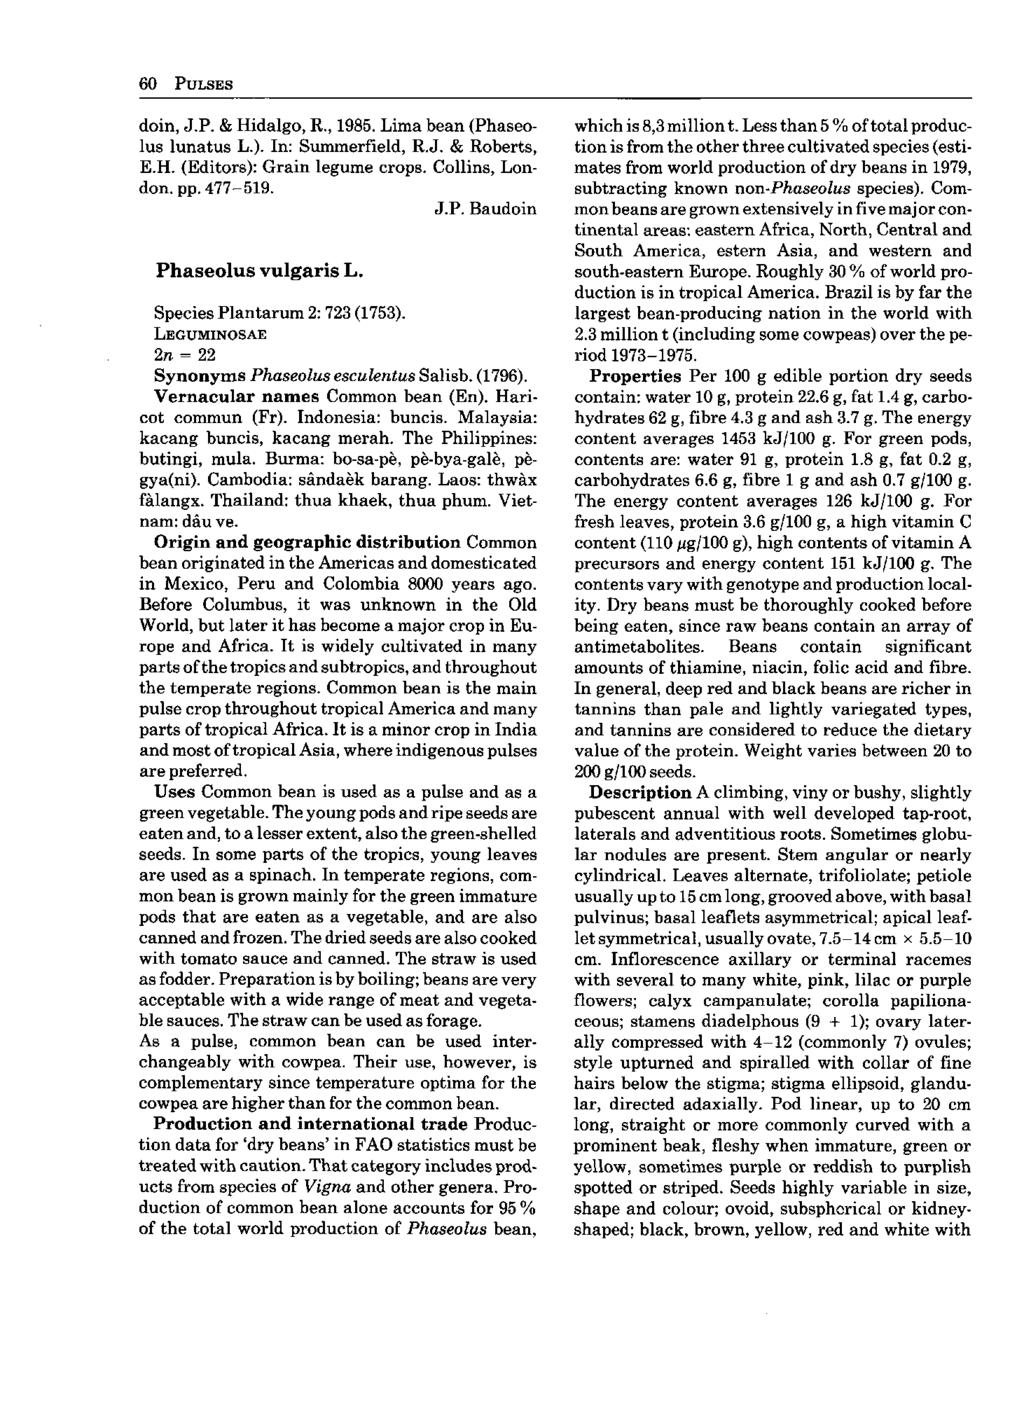 60 PULSES doin, J.P. & Hidalgo, R., 1985. Lima bean (Phaseolus lunatus L.). In: Summerfield, R.J. & Roberts, E.H. (Editors): Grain legume crops. Collins, London, pp. 477-519. J.P. Baudoin Phaseolus vulgaris L.